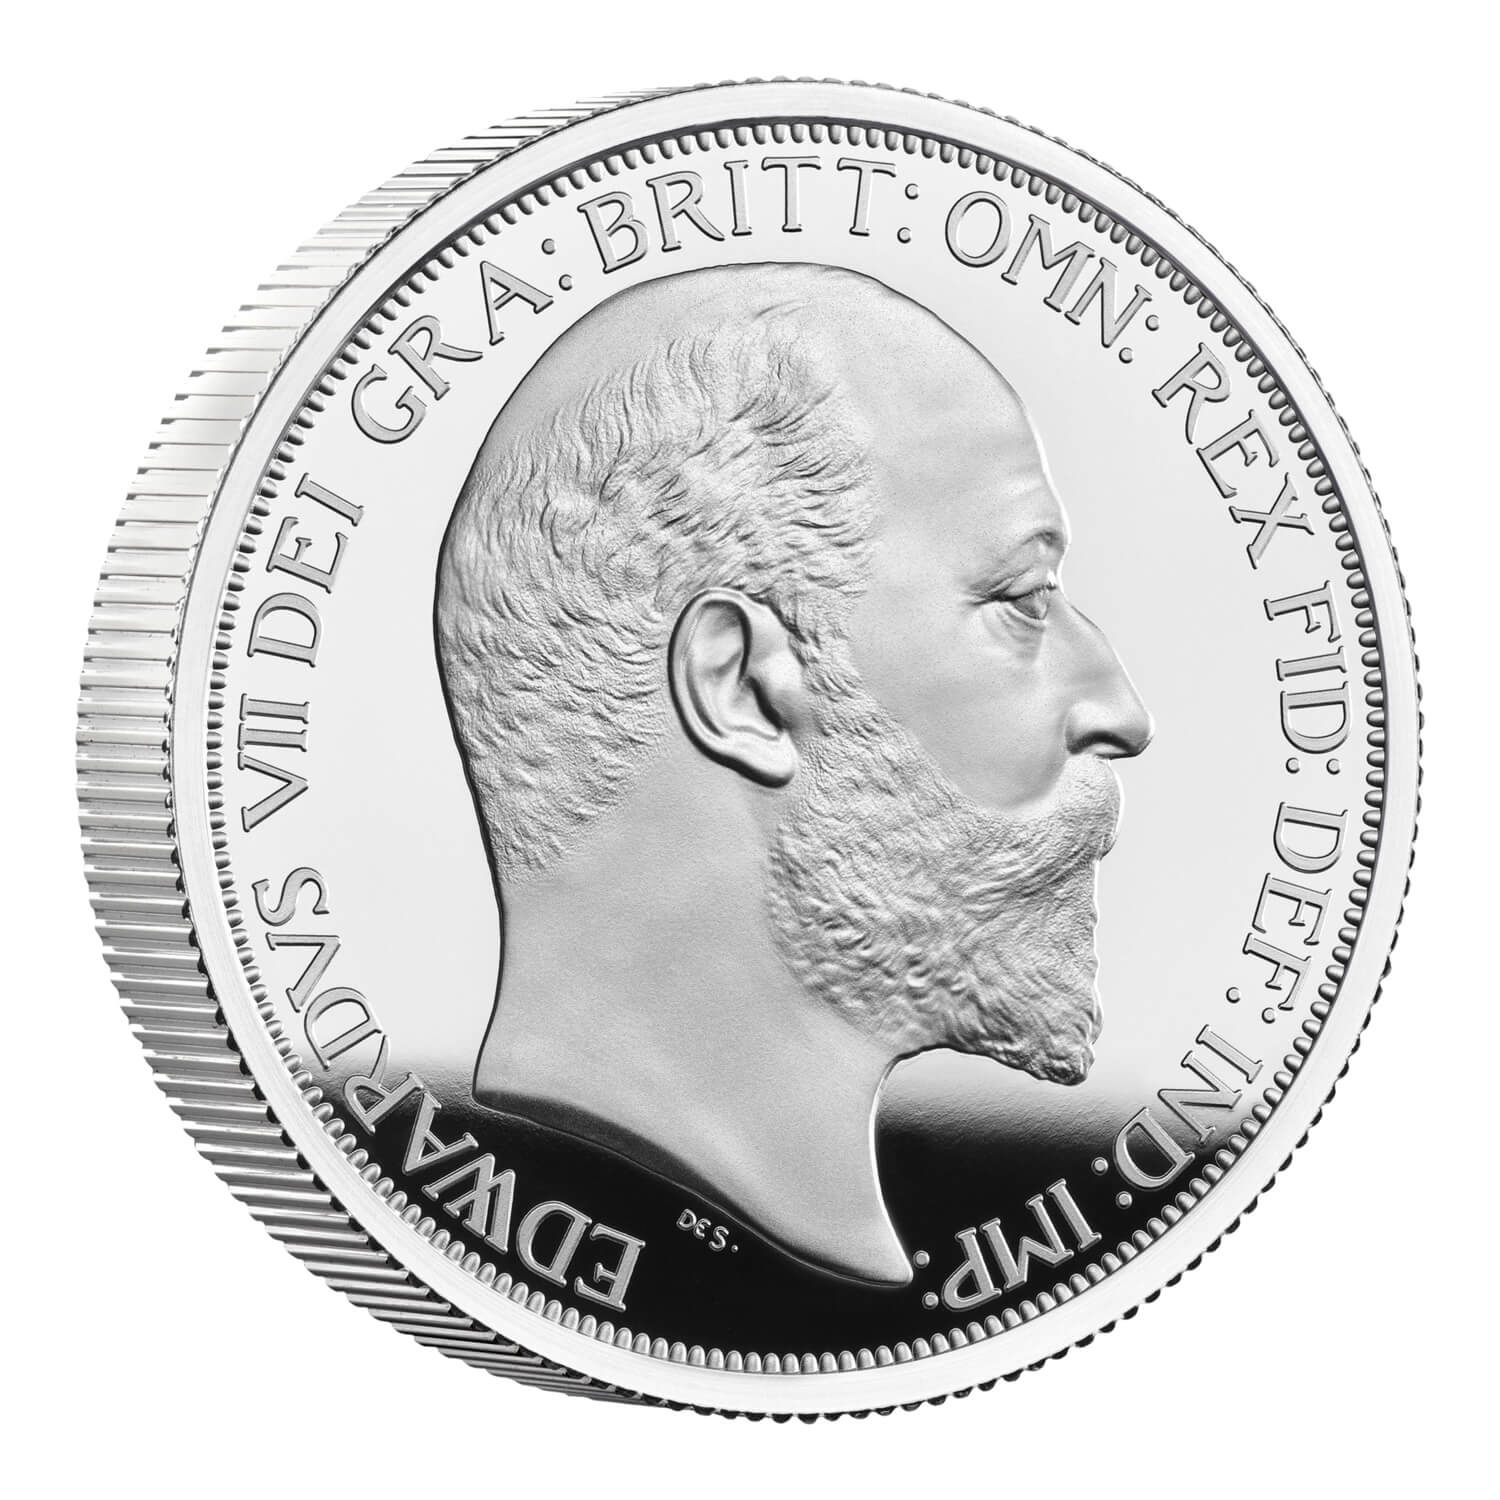 (W185.5.P.2022.UK22E7S2O) 5 Pounds UK 2022 2 oz Proof silver - King Edward VII Reverse (zoom)